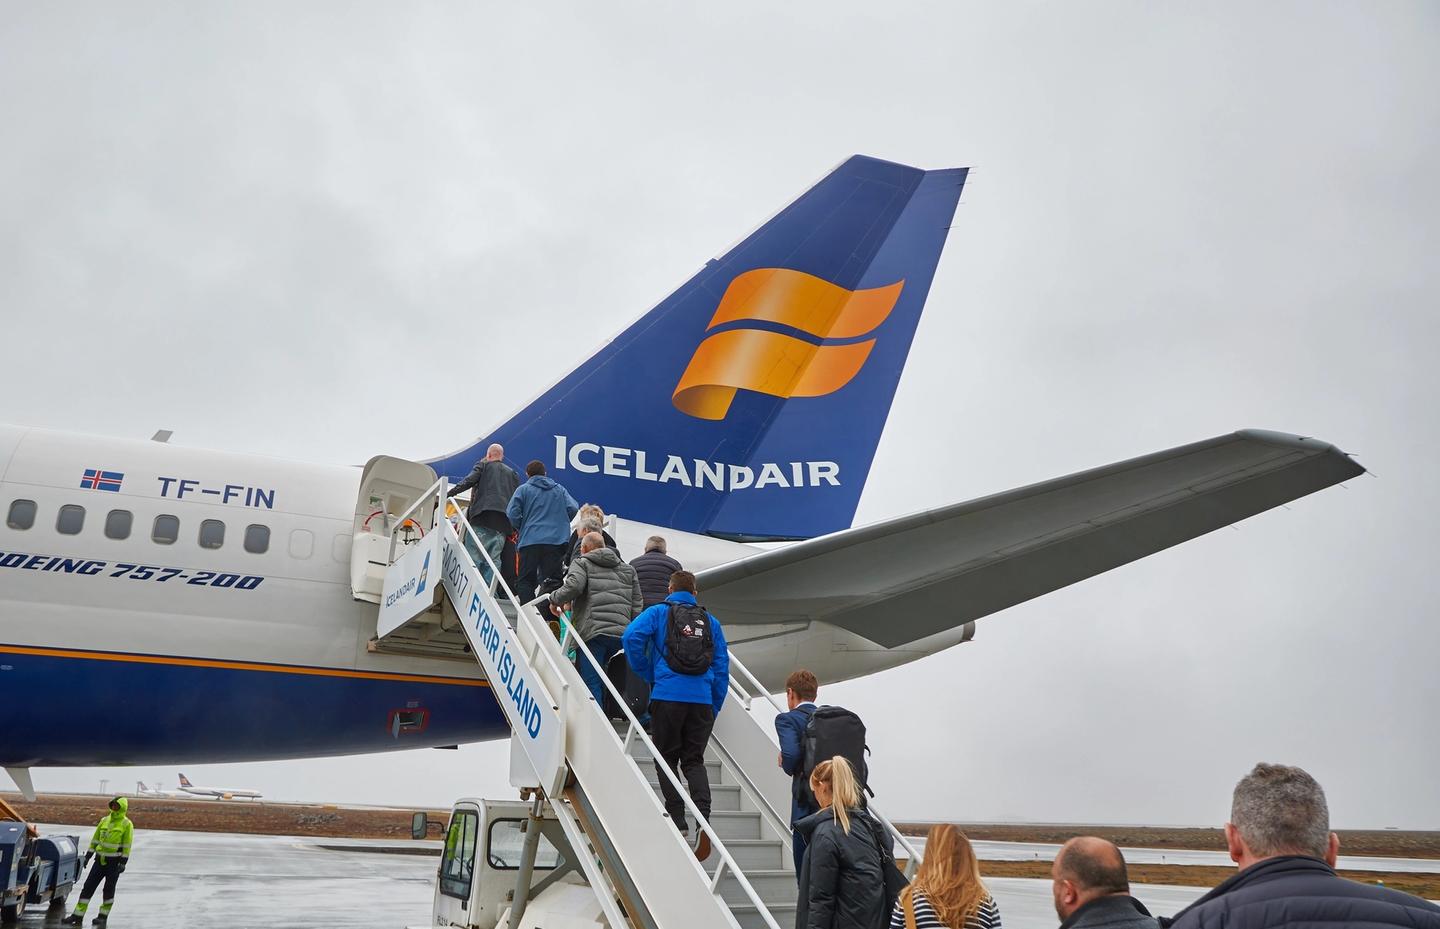 group of people boarding an Icelandic plane at Keflavik airport